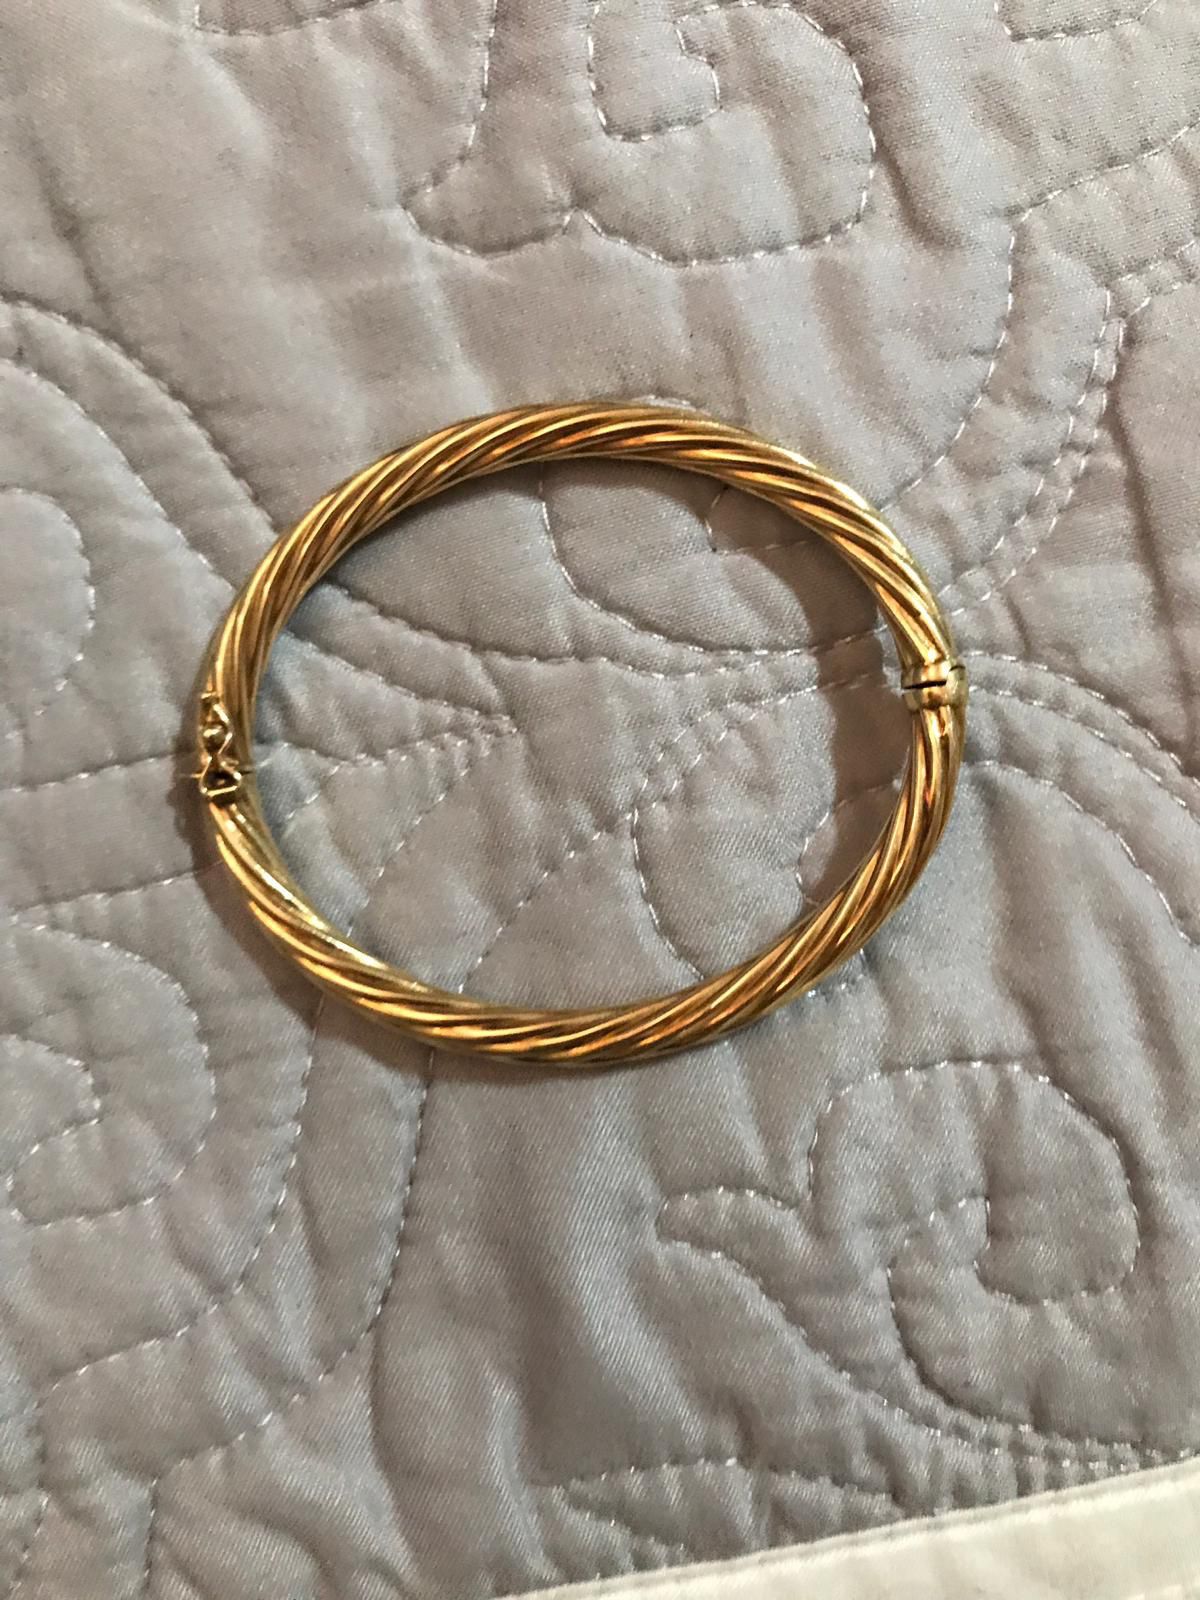 18 carat gold bracelet weighs 10 grams